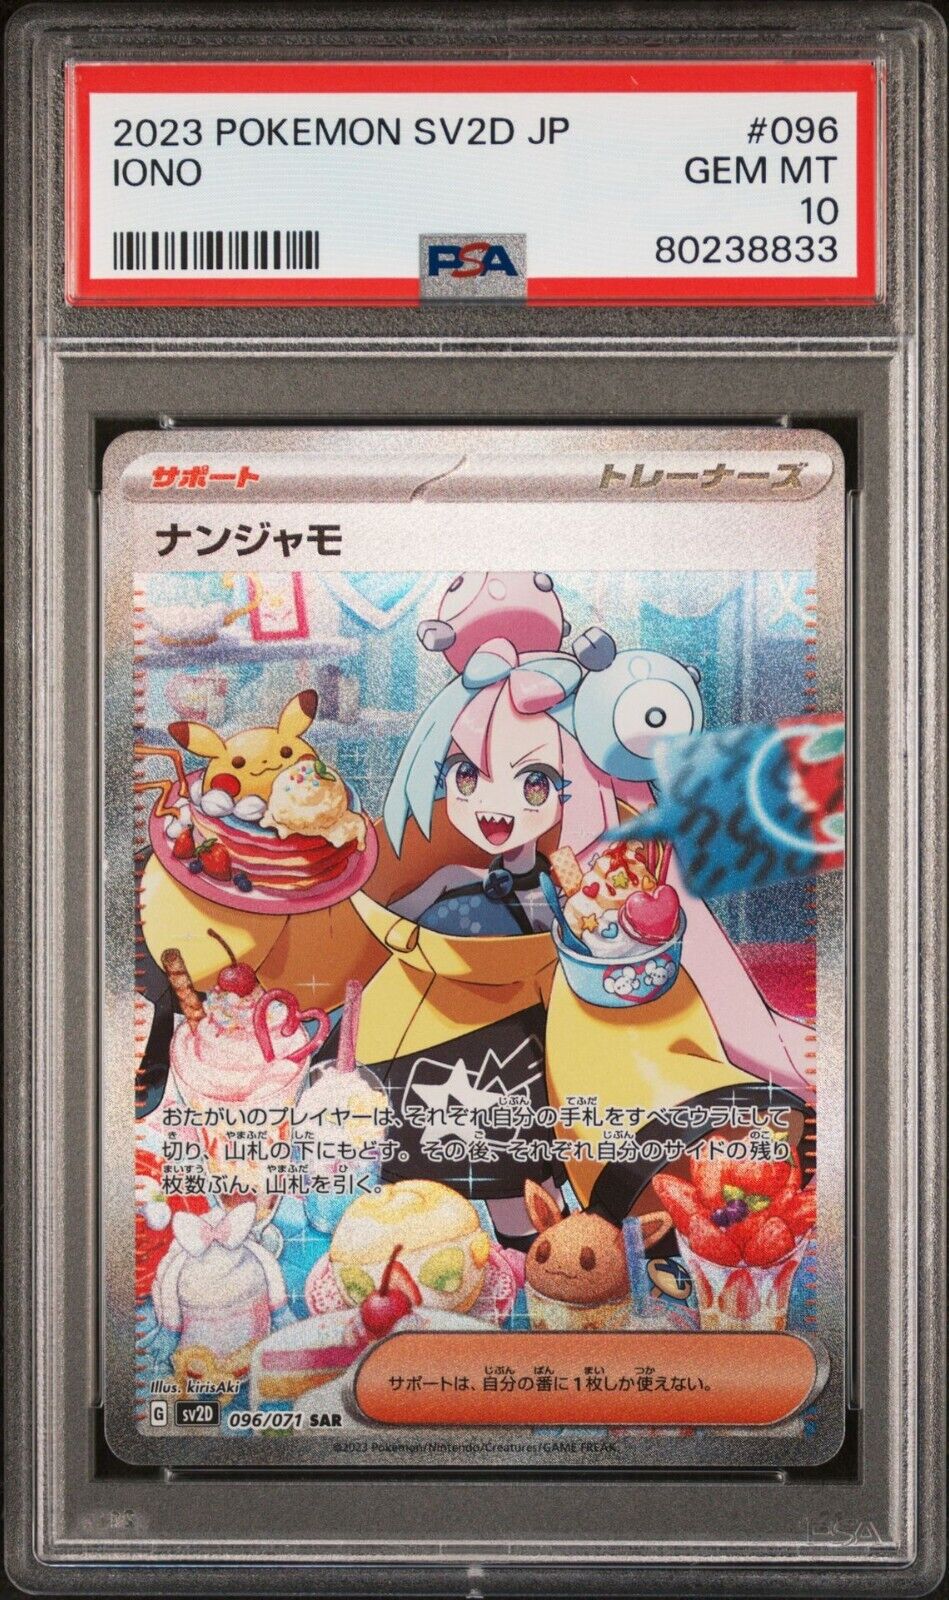 Iono 096  PSA 10  JAPANESE  Pokemon 2023 sv2d Clay Burst  GEM MINT 10